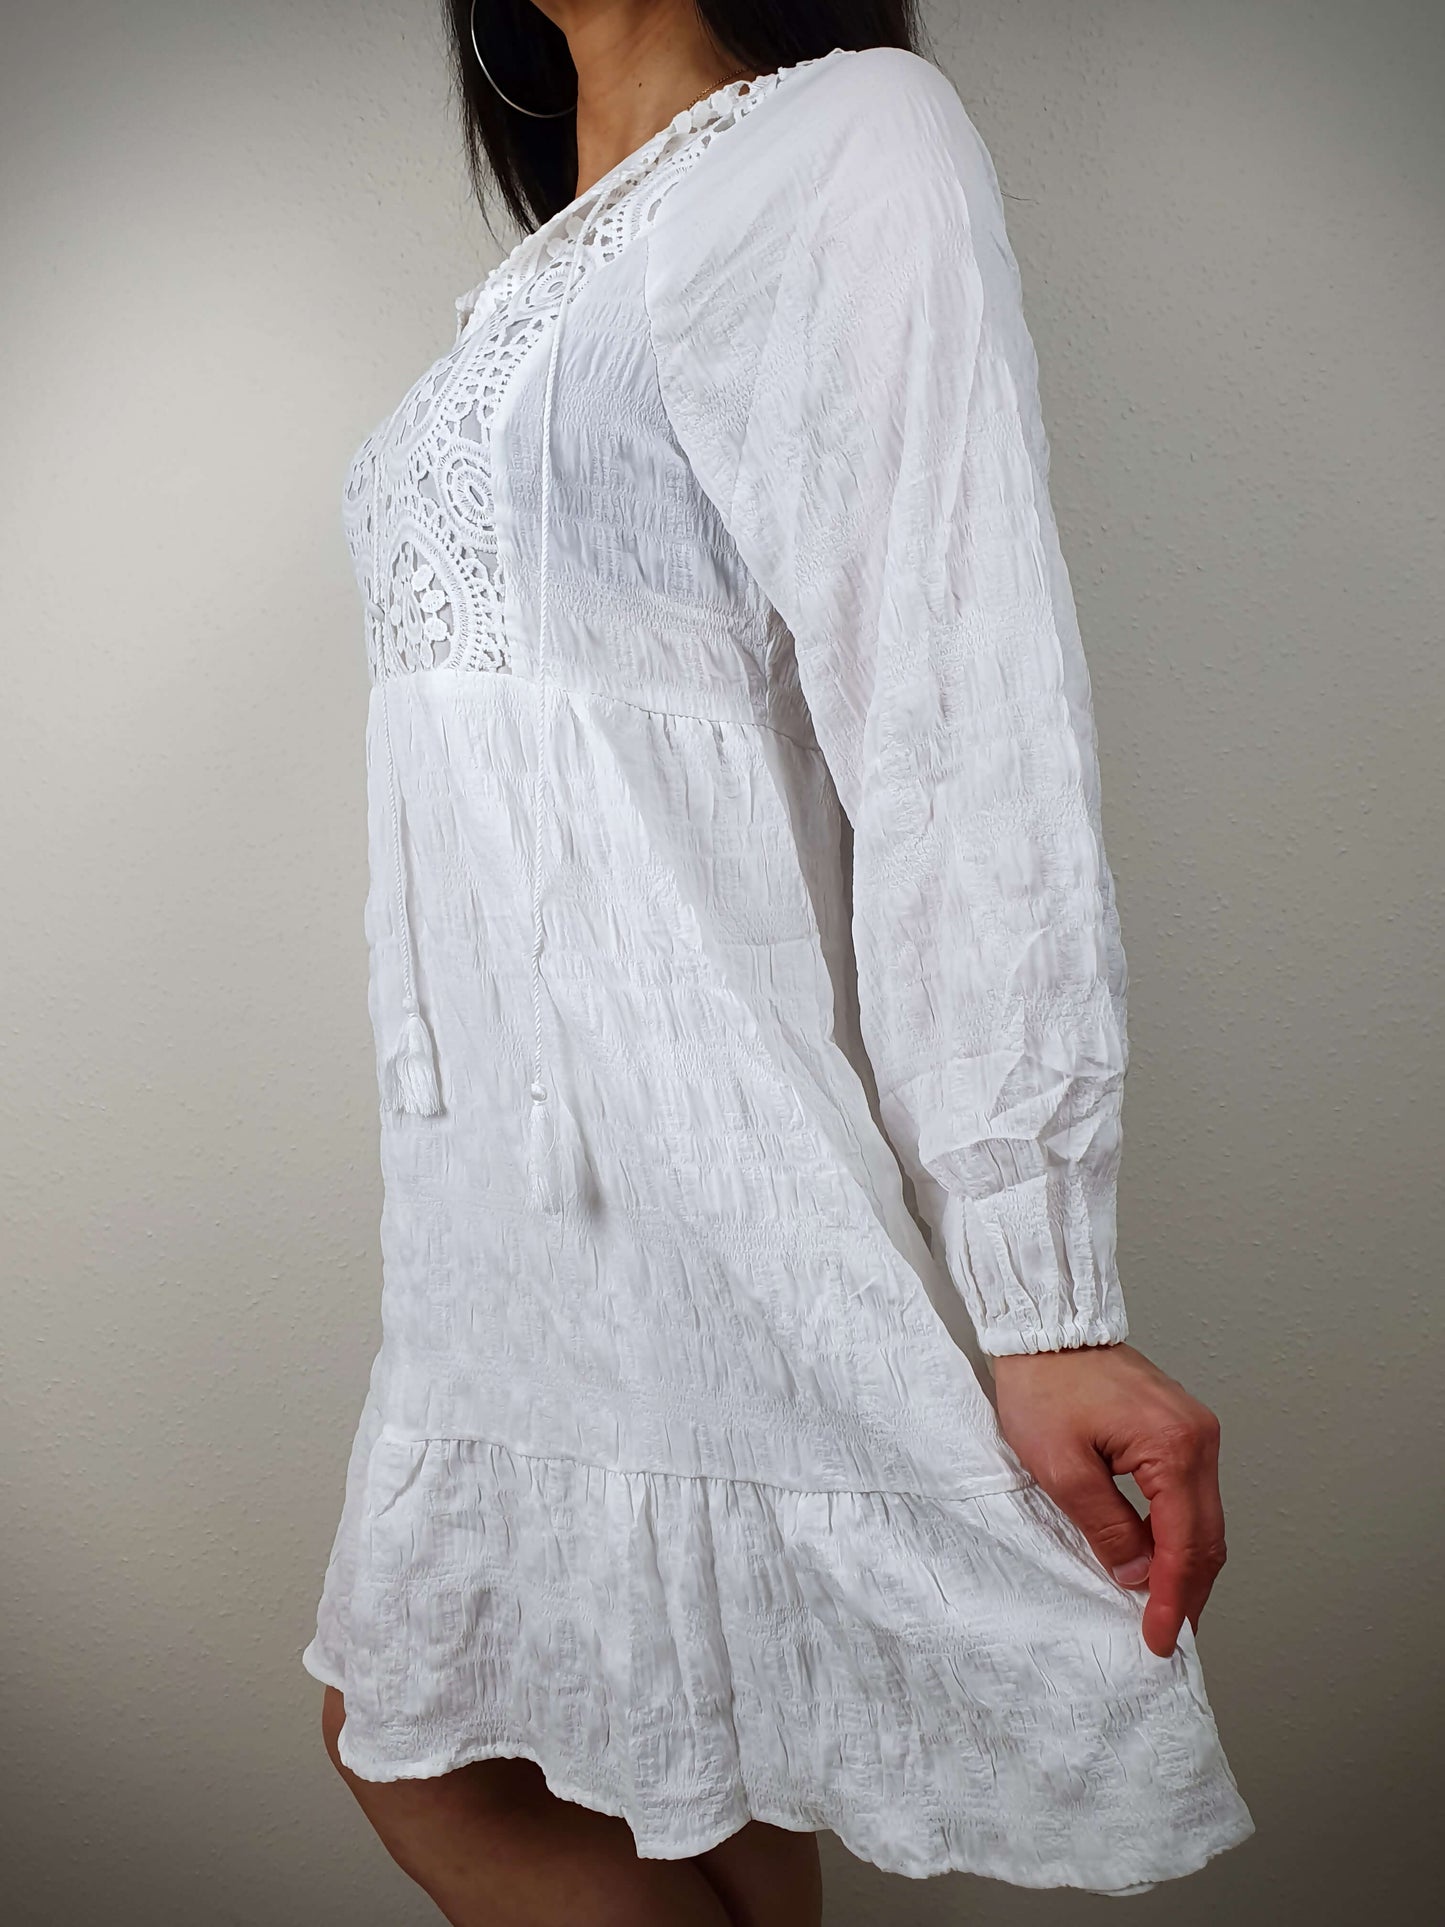 Robe blanche en broderie anglaise à découvrir sur www.gayano.fr